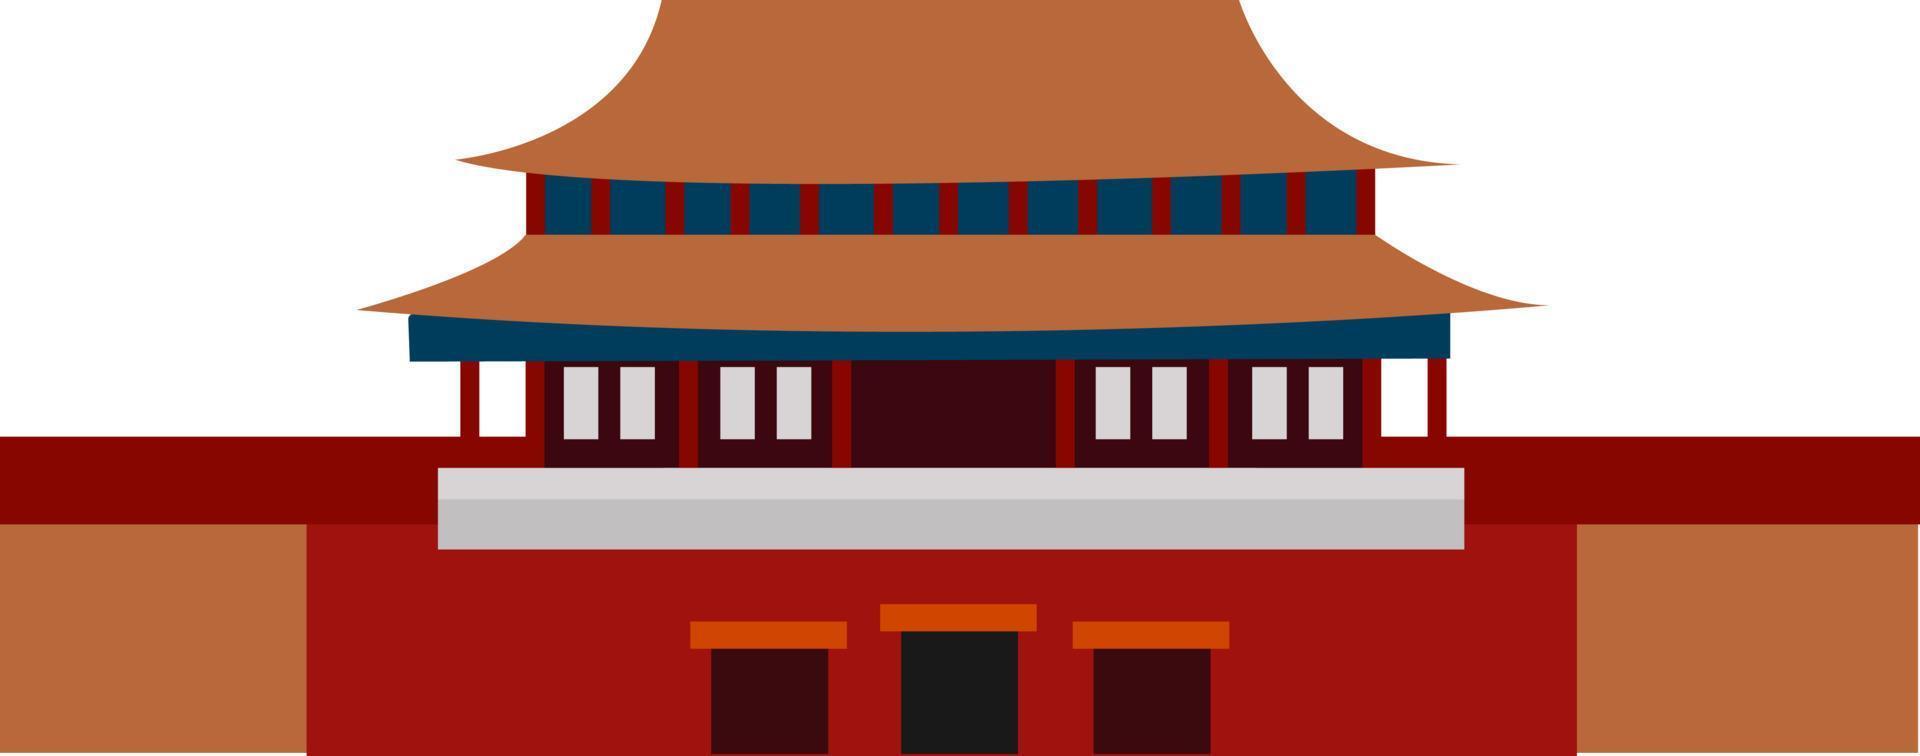 Forbidden city, illustration, vector on white background.